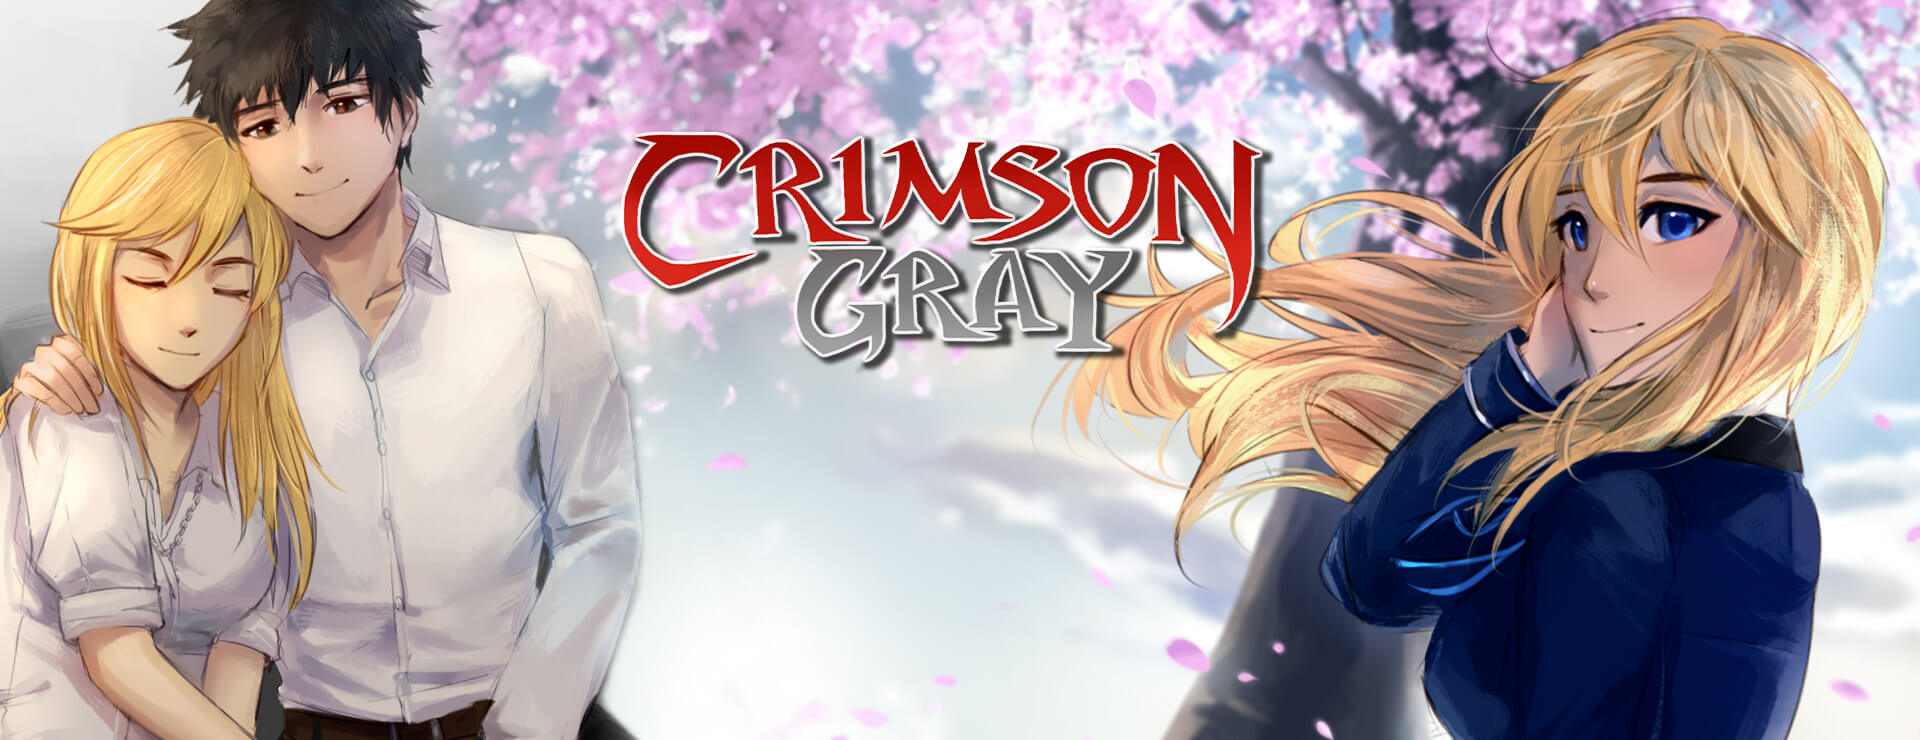 Crimson Gray (SFW Version) - Action Adventure Game